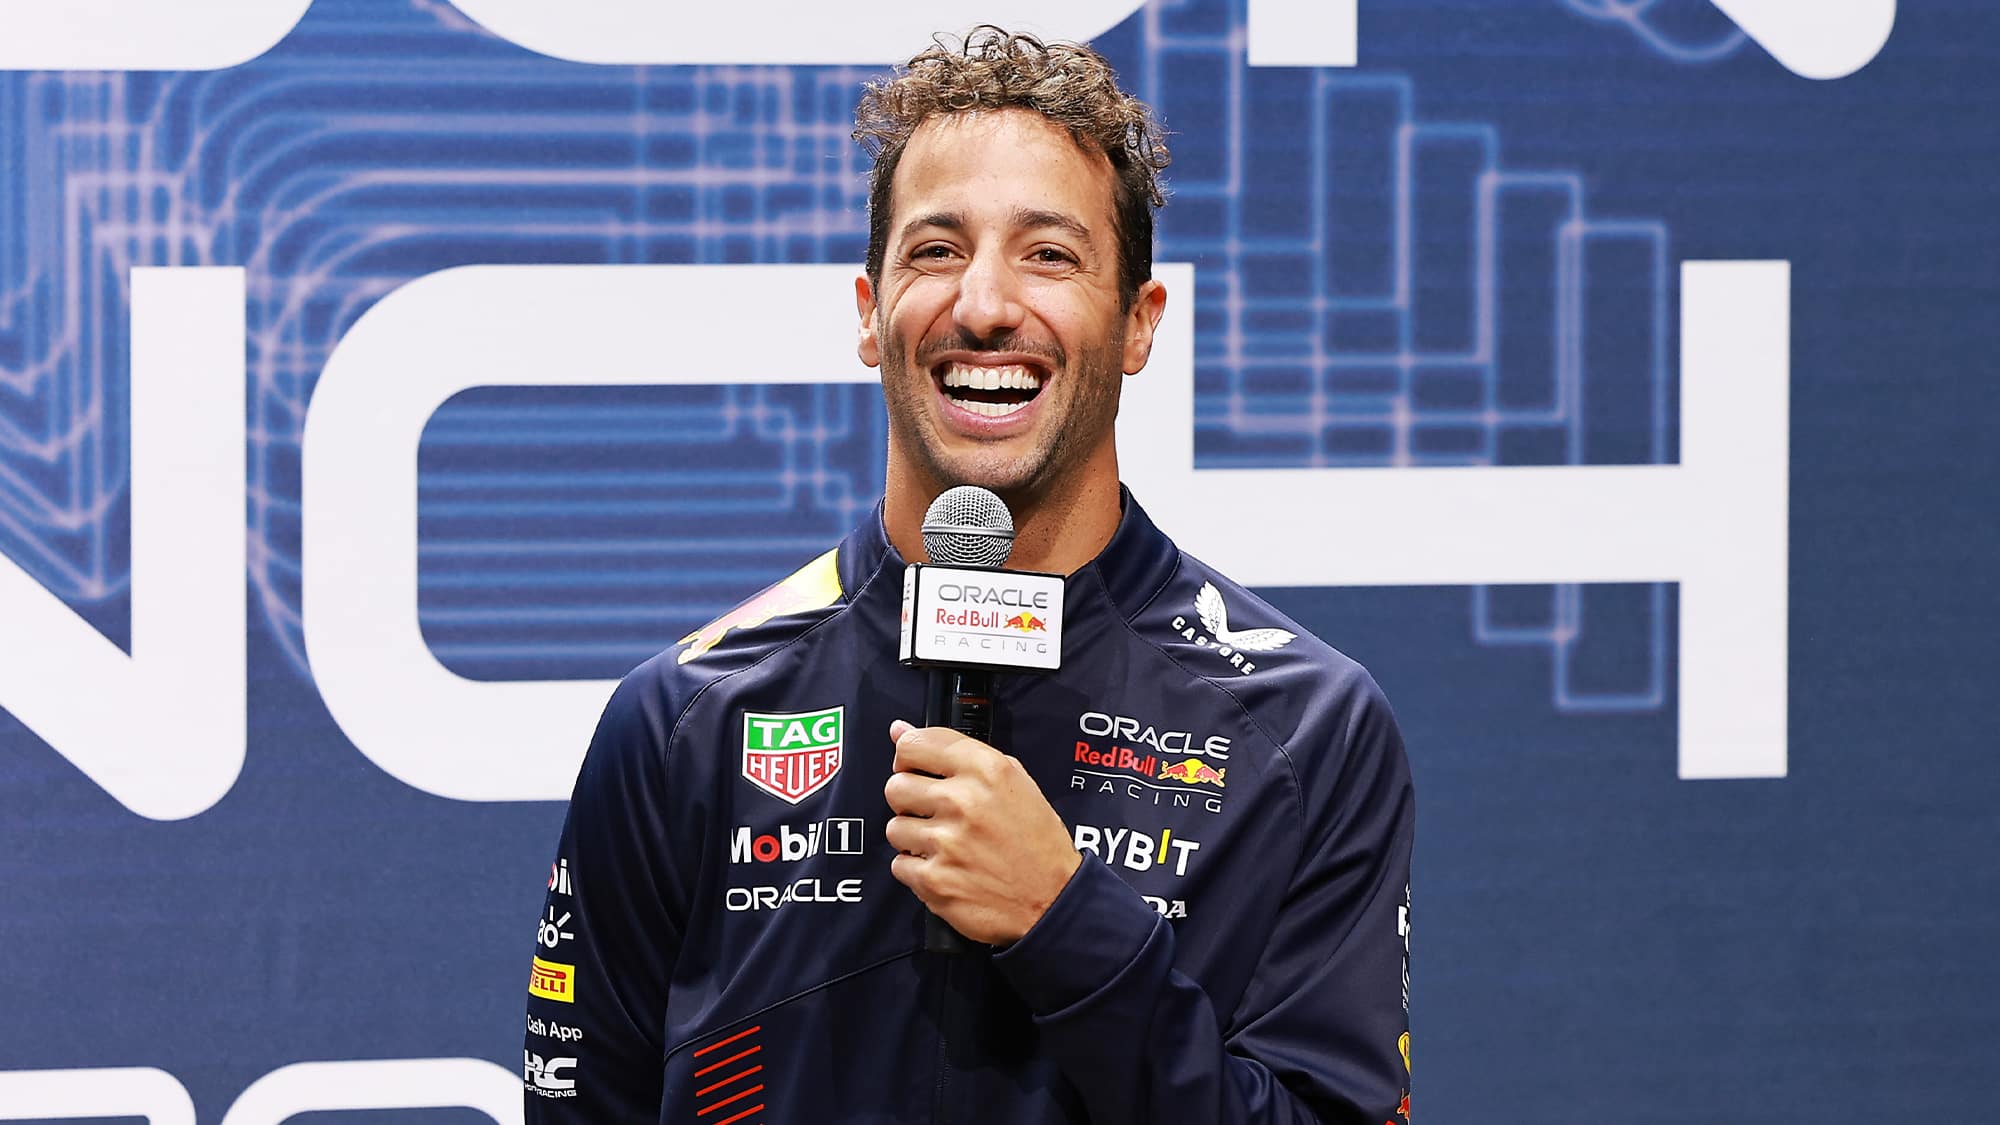 Medland Ricciardos ready — to retire from F1?